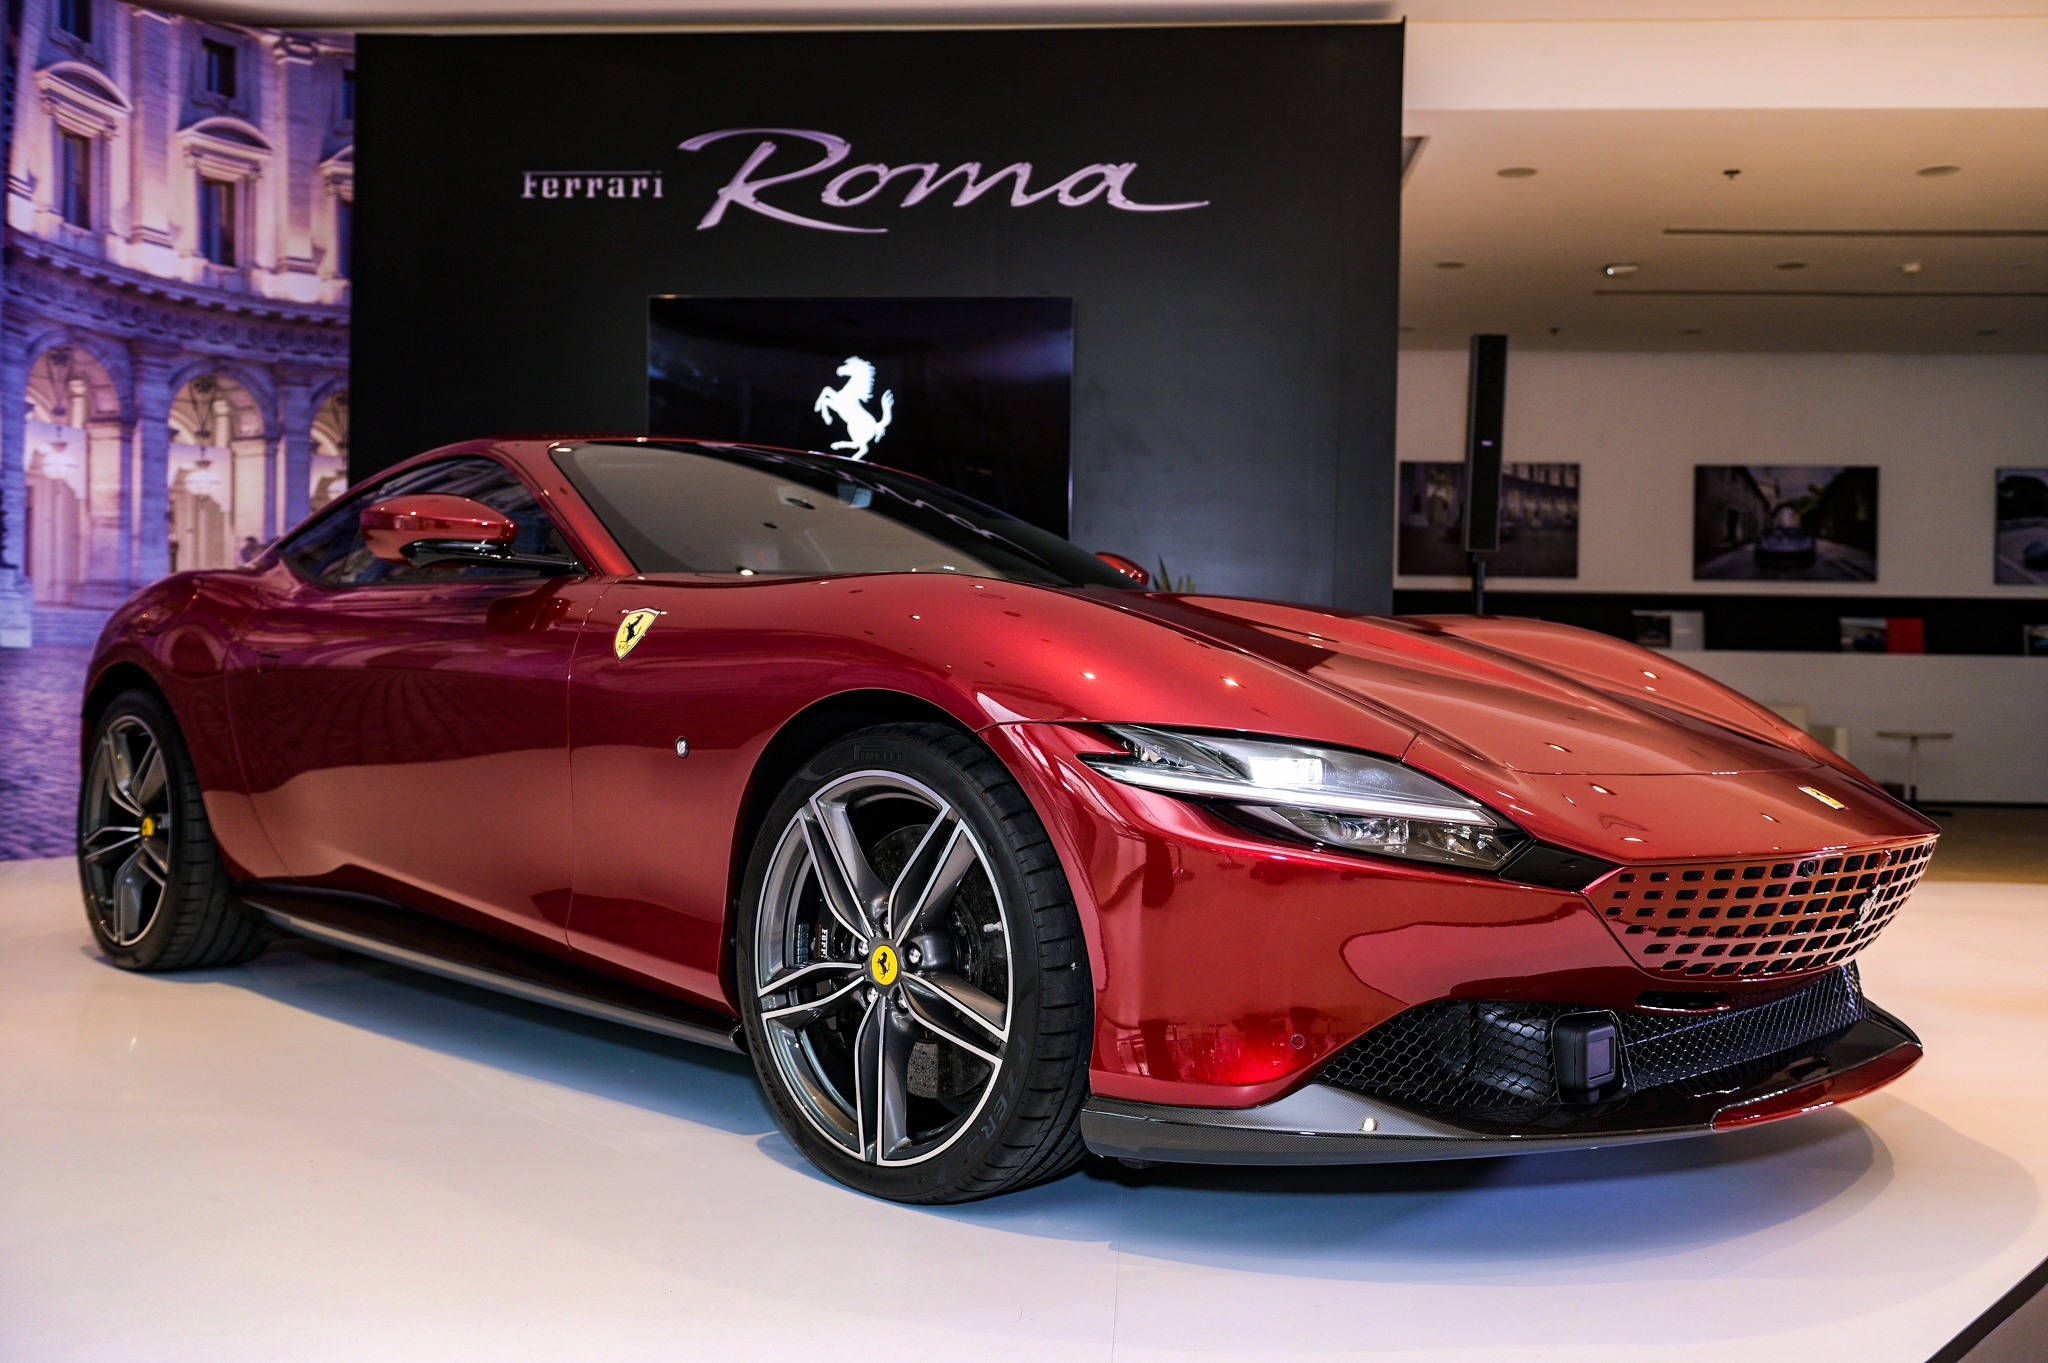 So sanh Ferrari Roma va Aston Martin DB11 anh 1